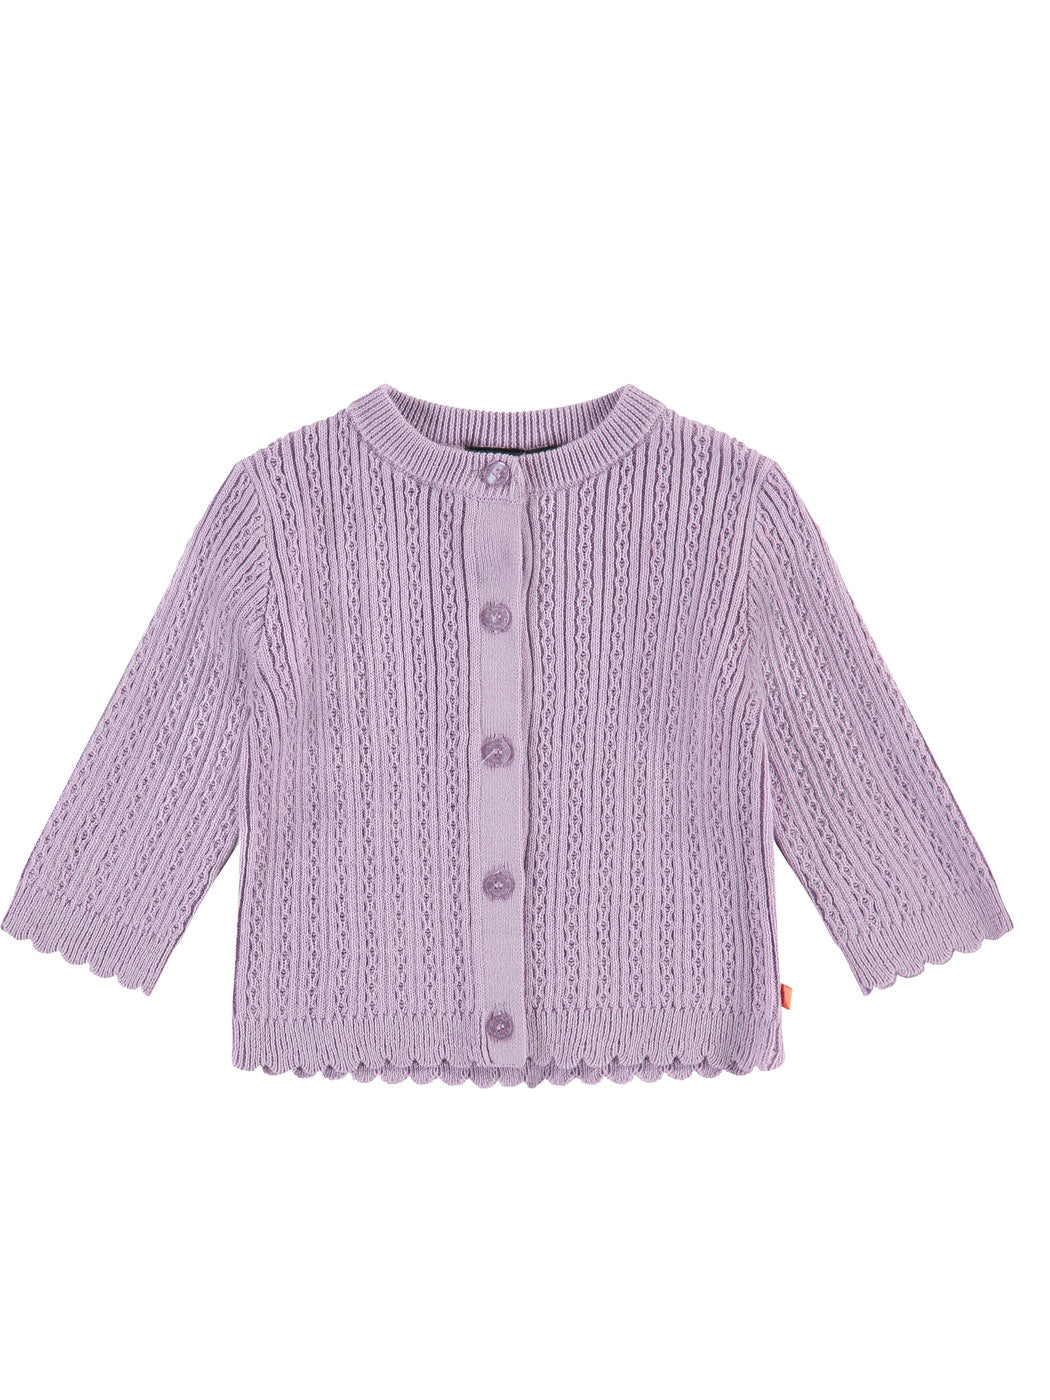 Knitted Baby Girls Cardigan - NWB23328340 Purple